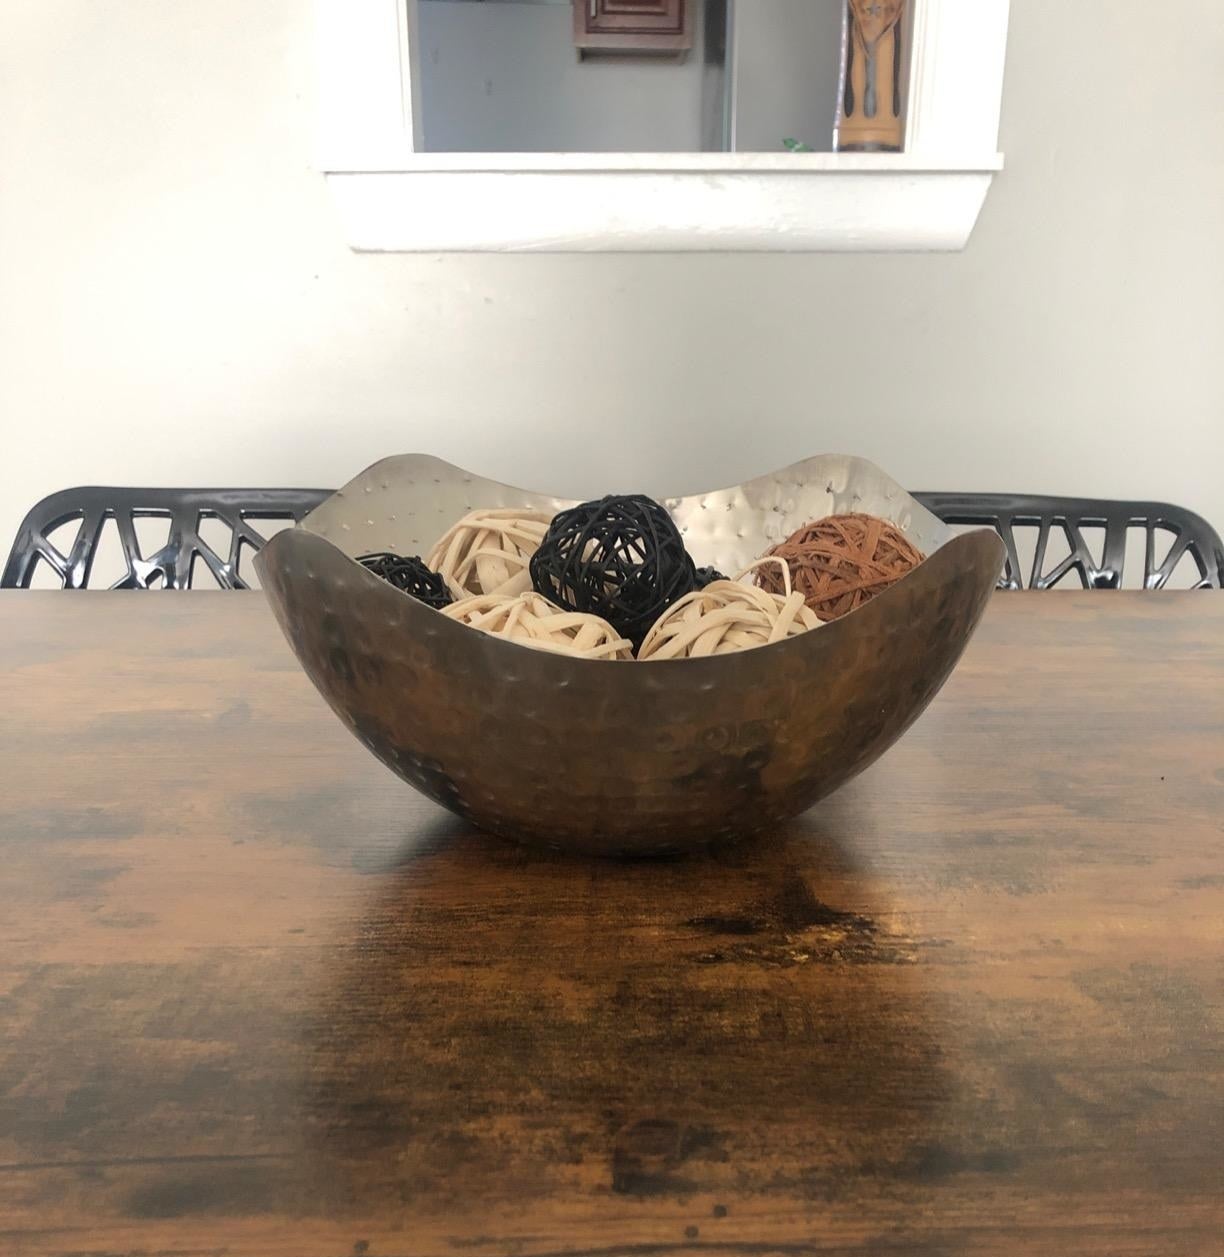 The bowl hammered metal bowl